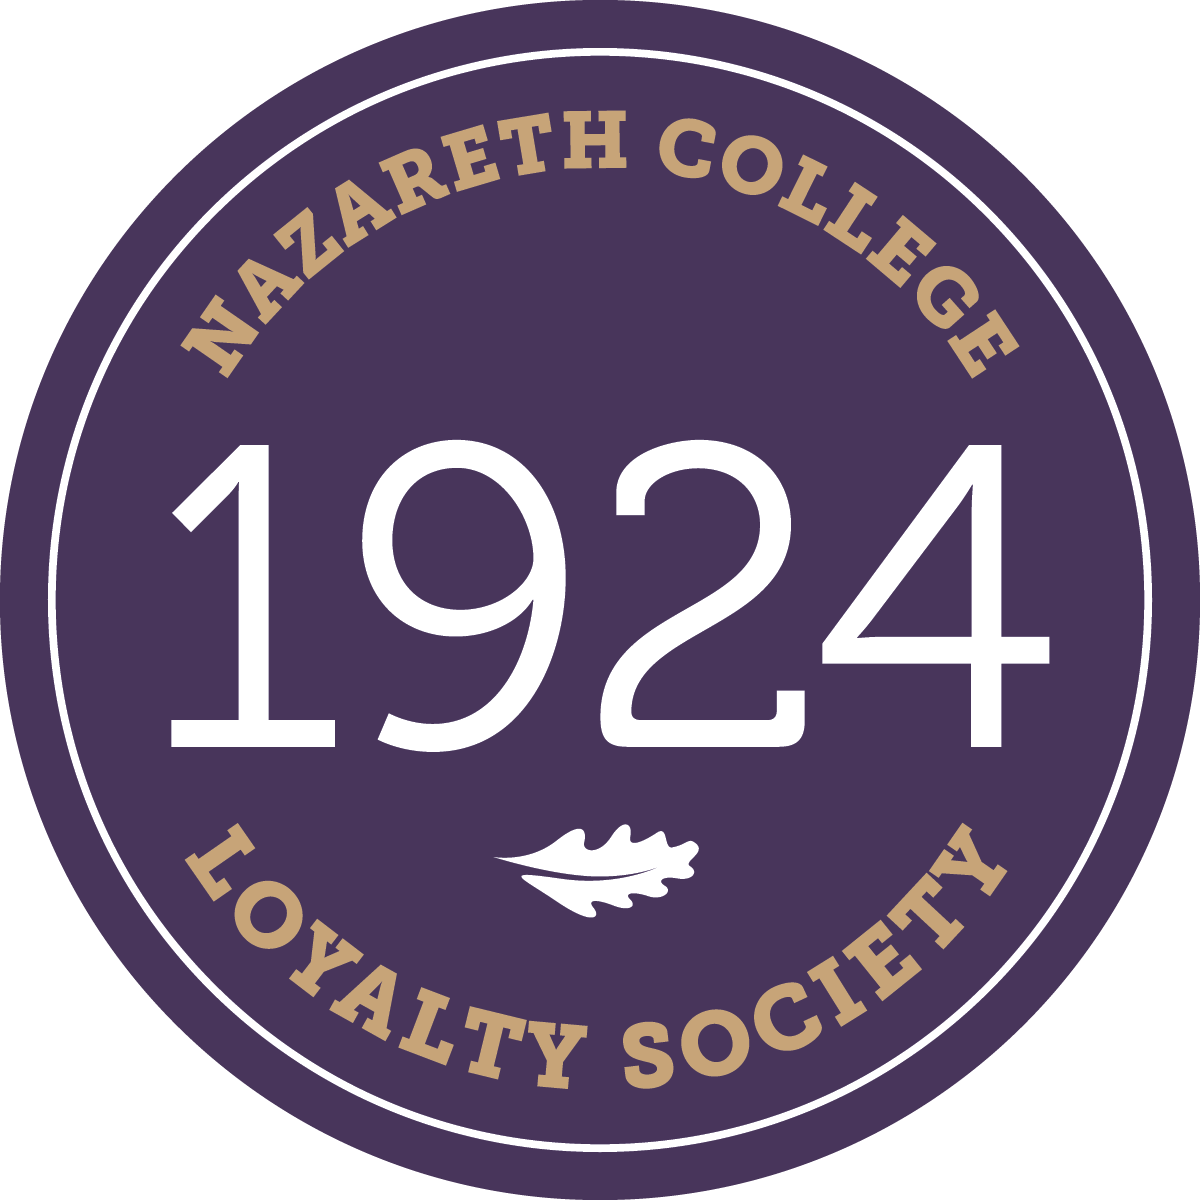 1924 Loyalty Society sticker